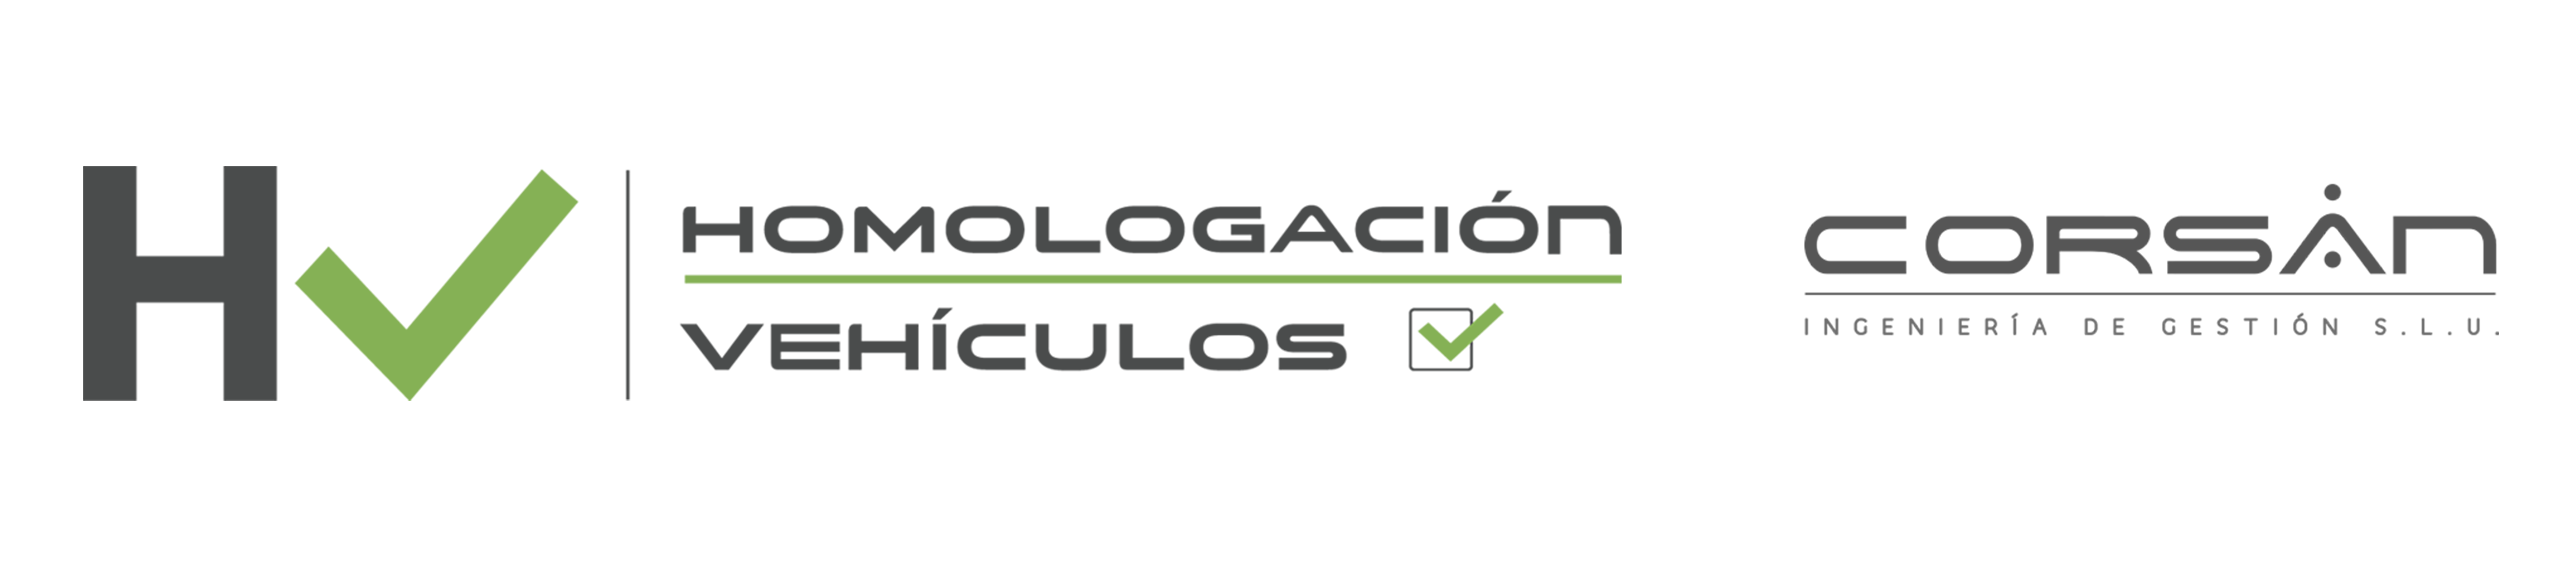 homologaci-vehiculos-logo